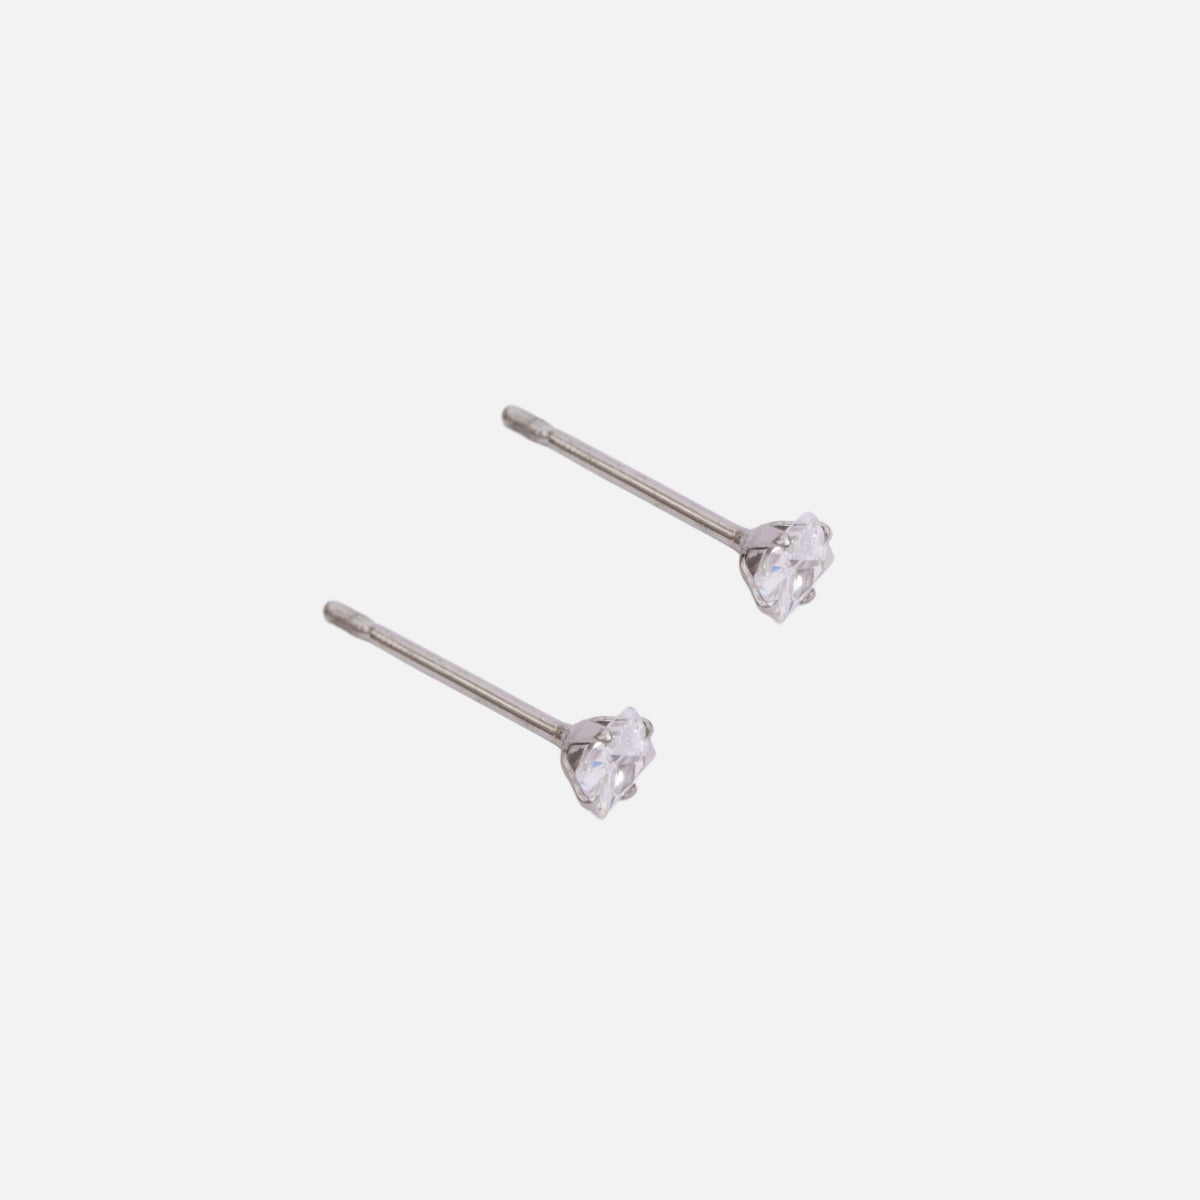 3 mm stainless steel earrings with zircon